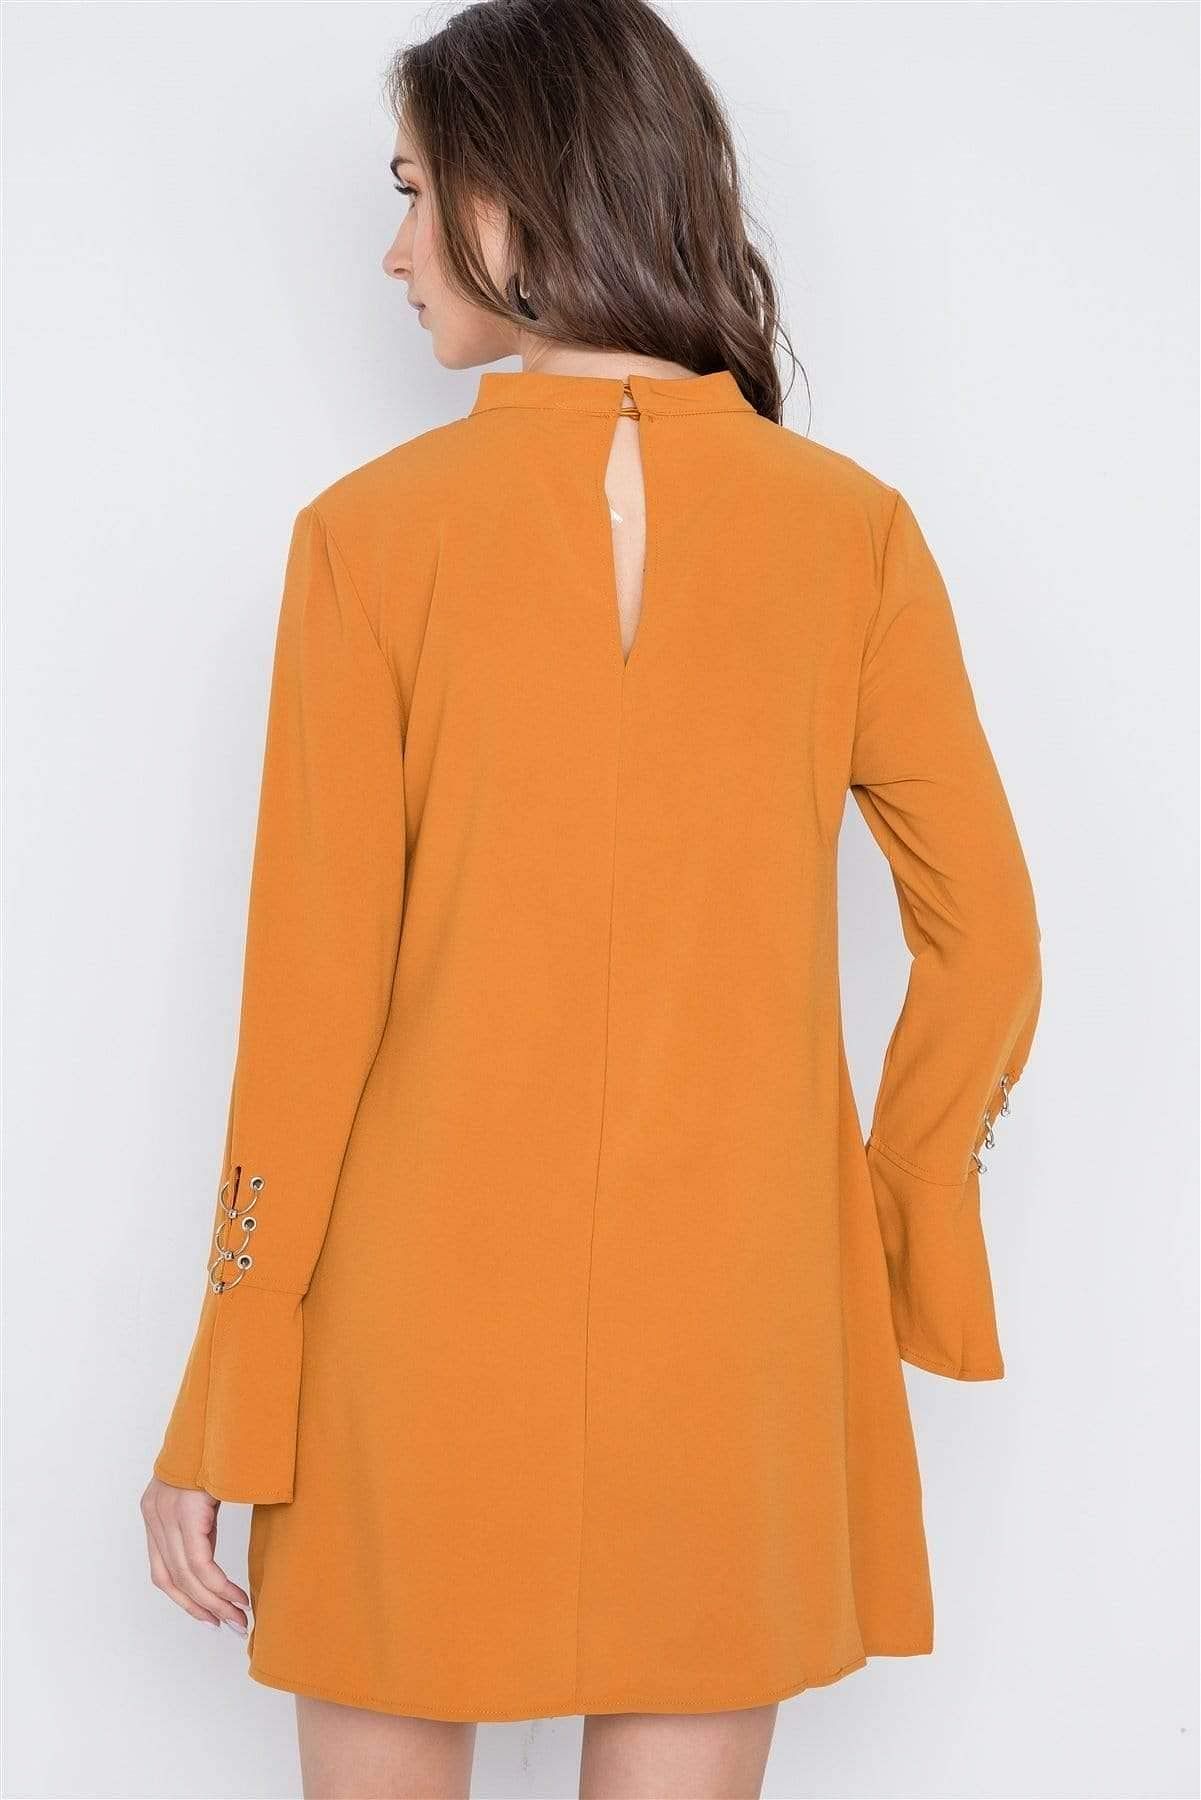 Camel Long Sleeve V-Neck Mini Dress - Shopping Therapy, LLC dress